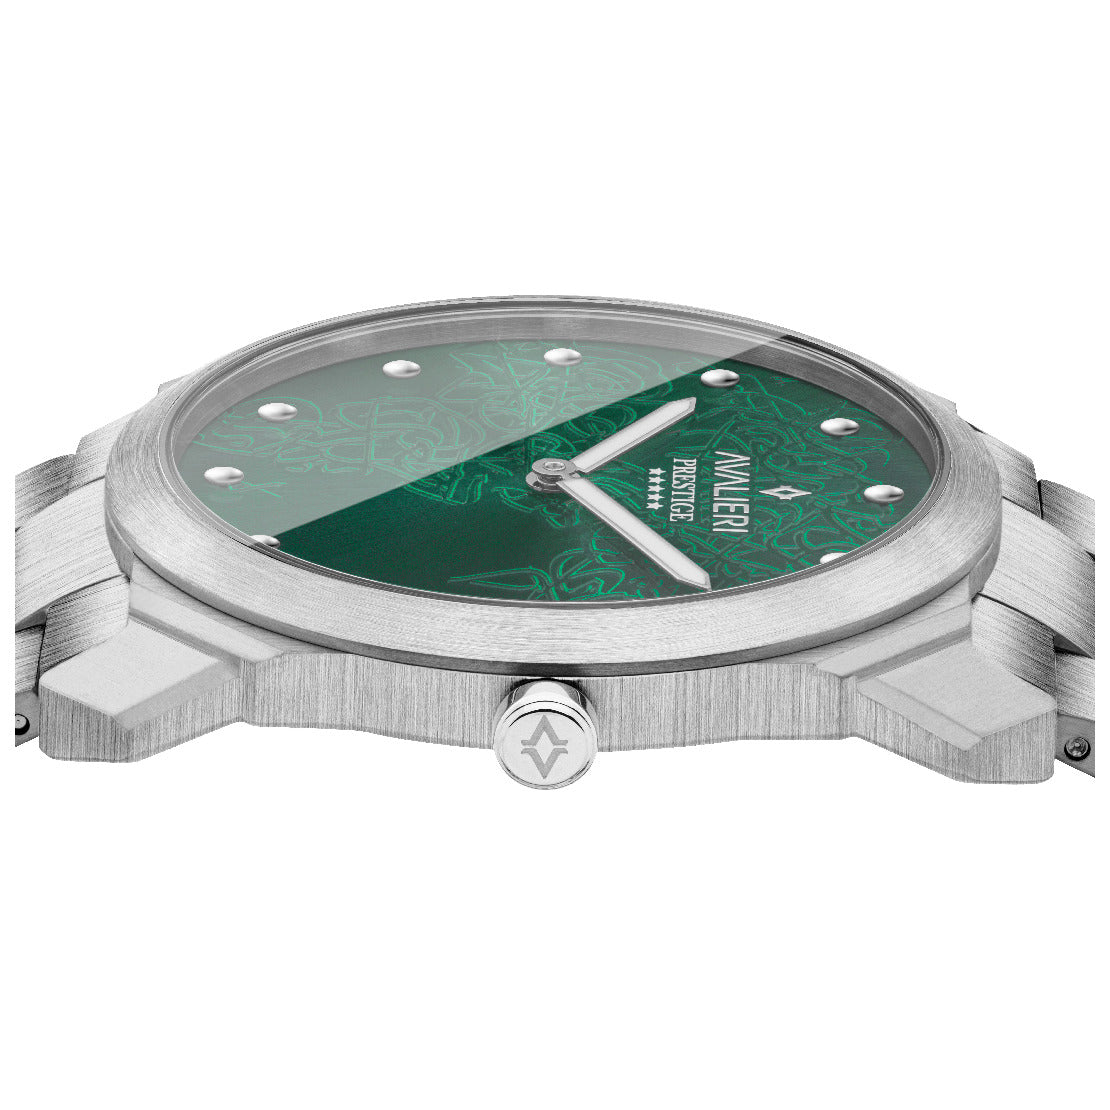 Avalieri Prestige Men's Watch, Swiss Quartz Movement, Green Dial - AP-0097